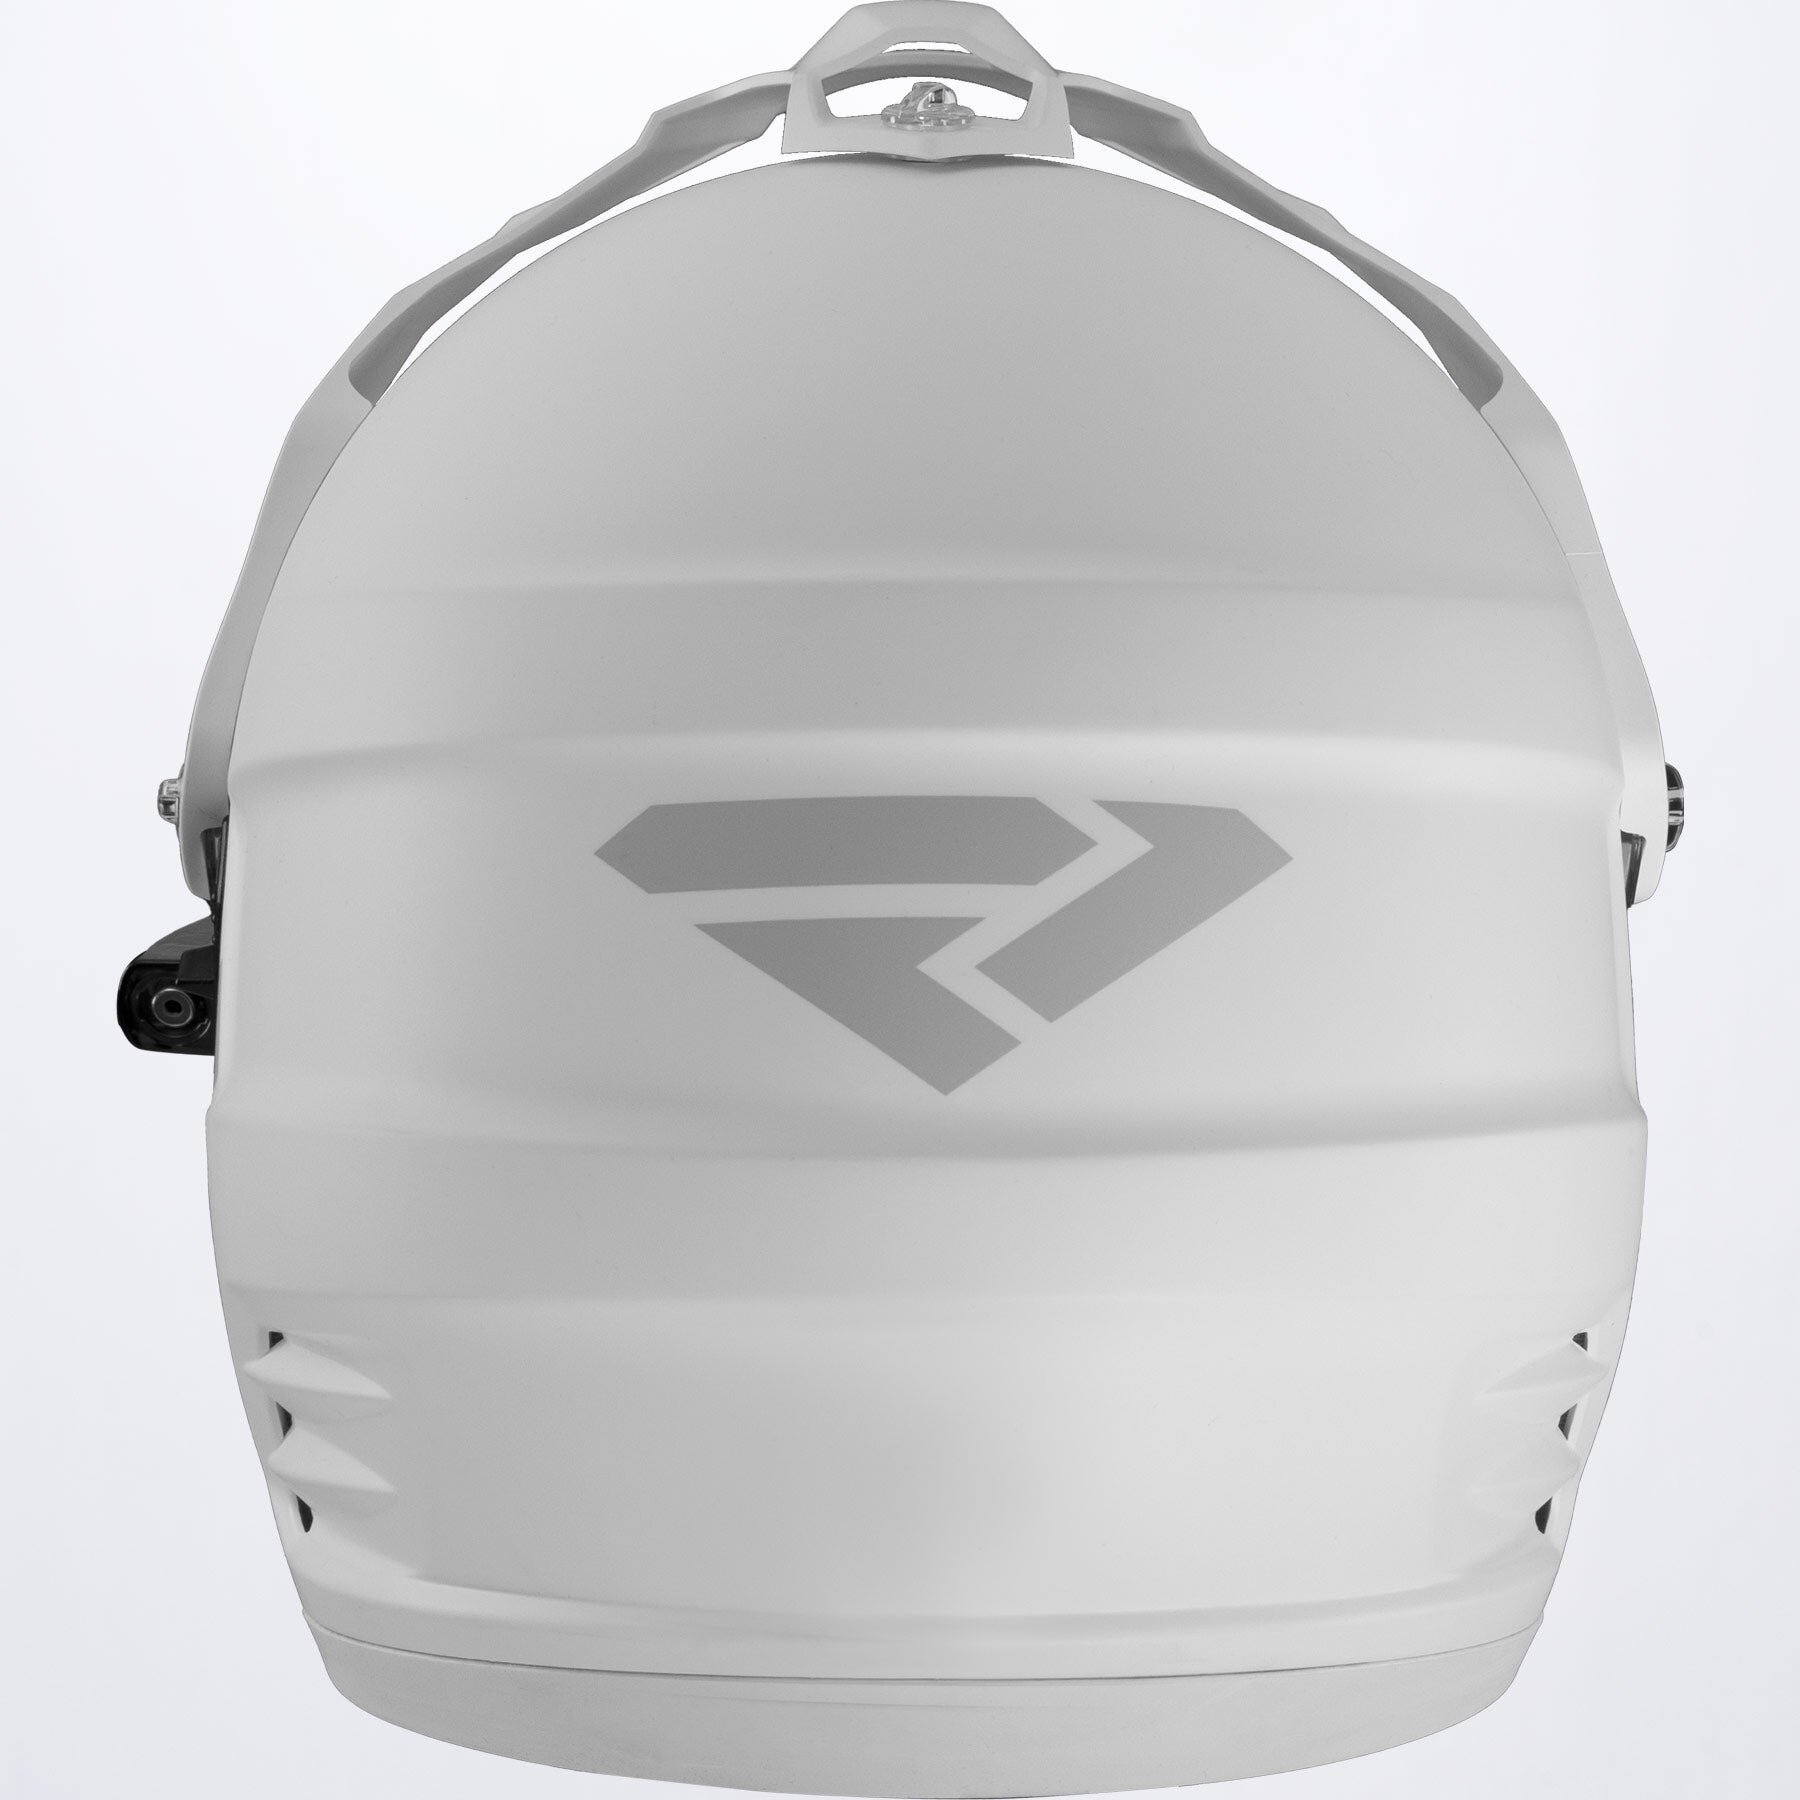 Torque X Prime Helmet with E Shield & Sun Shade XS Black